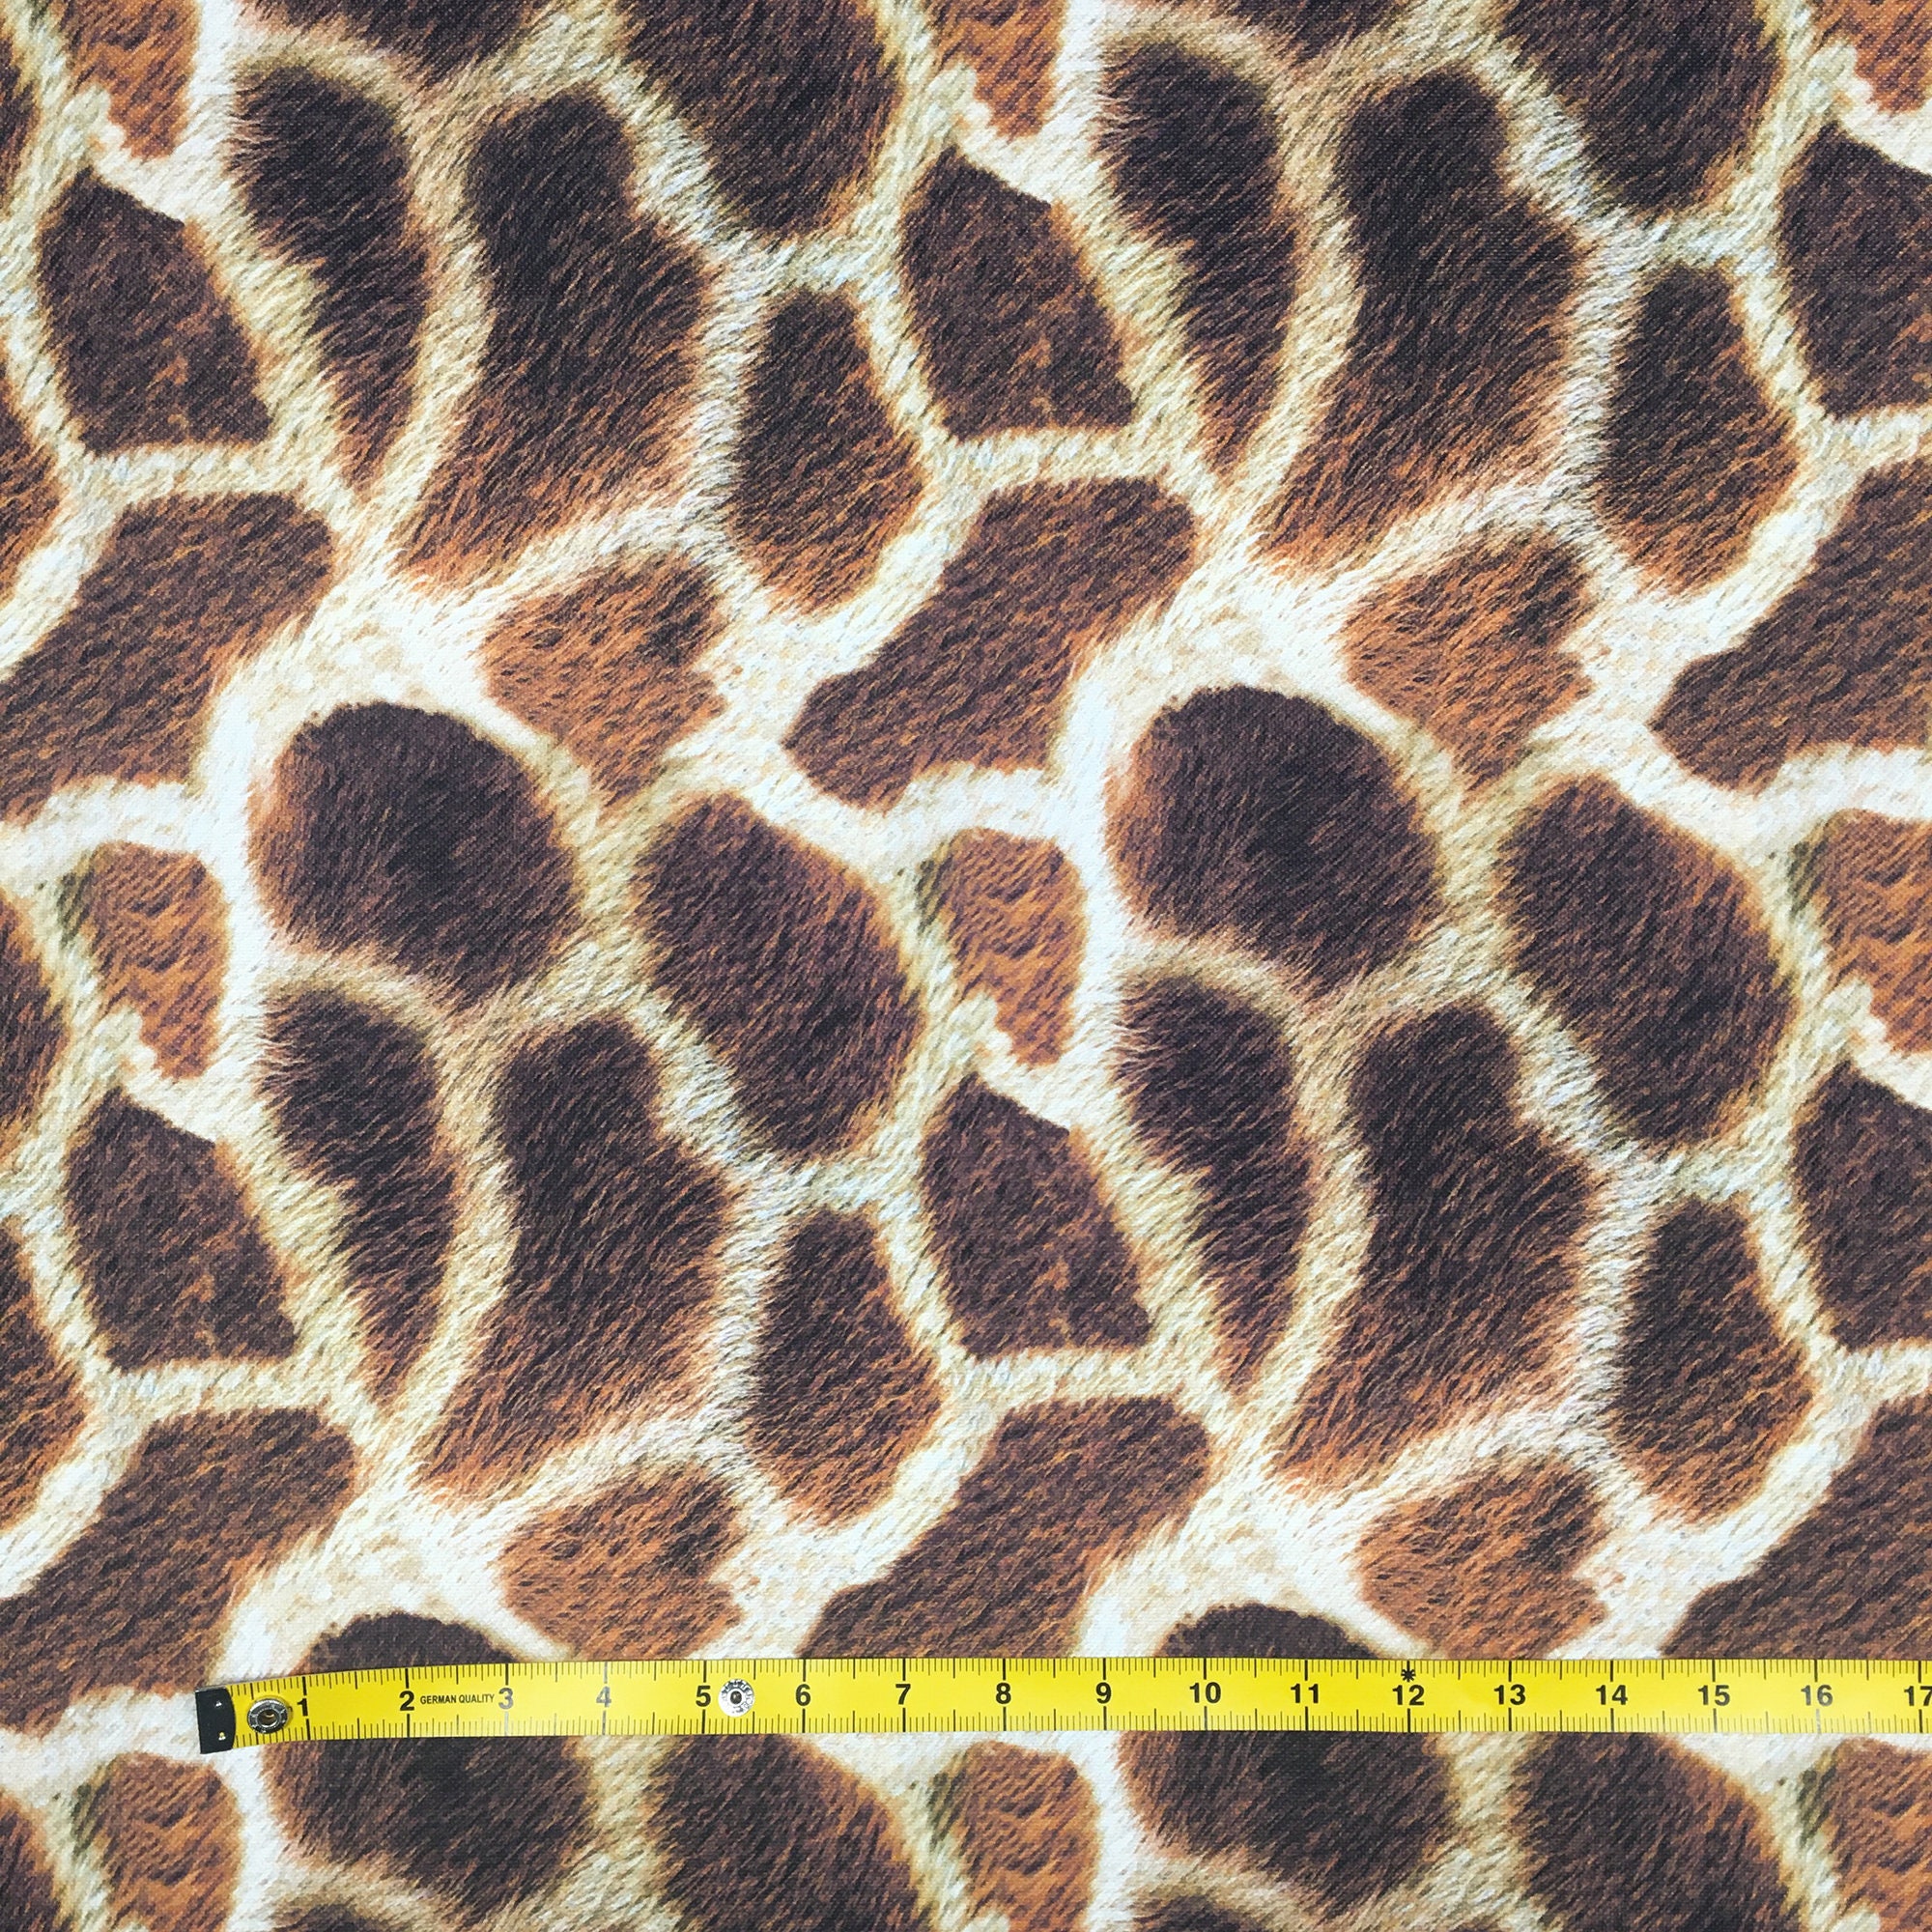 Giraffe satin fabric Giraffe fabric Animal fabric. Stretch satin fabric Pink and brown fabric satin stretch Camelopard fabric